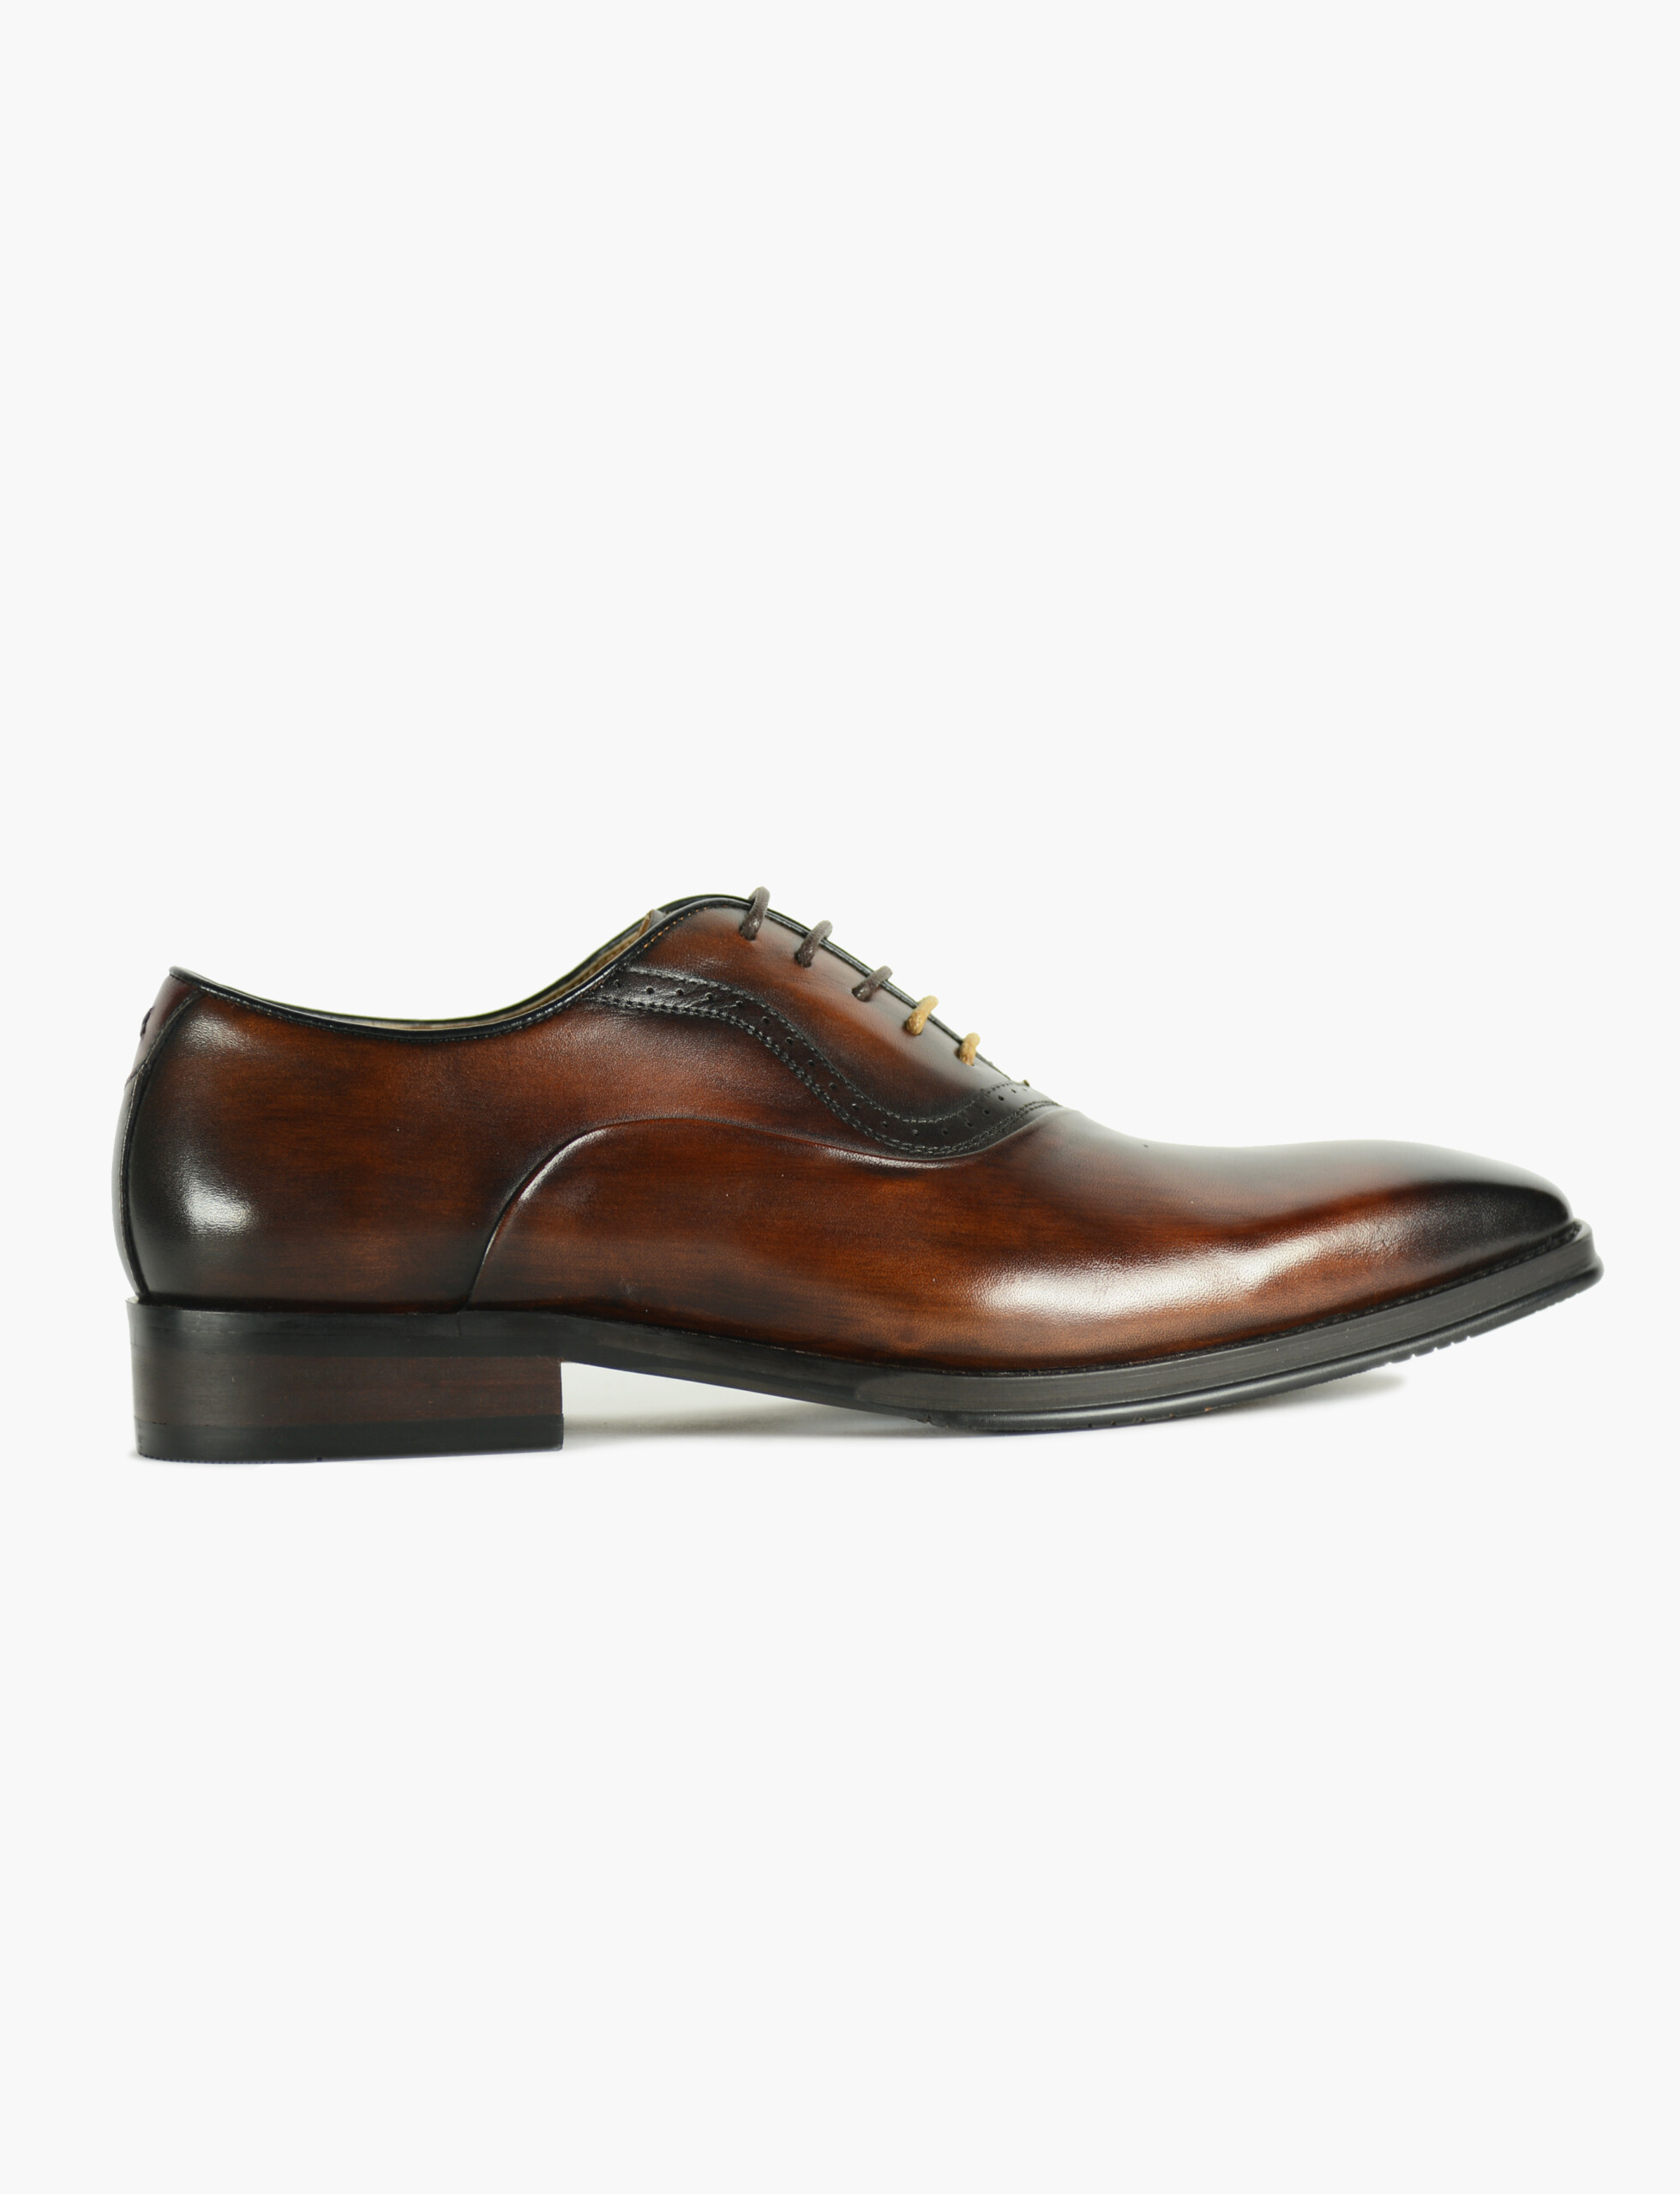 Geneva Brown Oxford Shoes - Formal Tailor